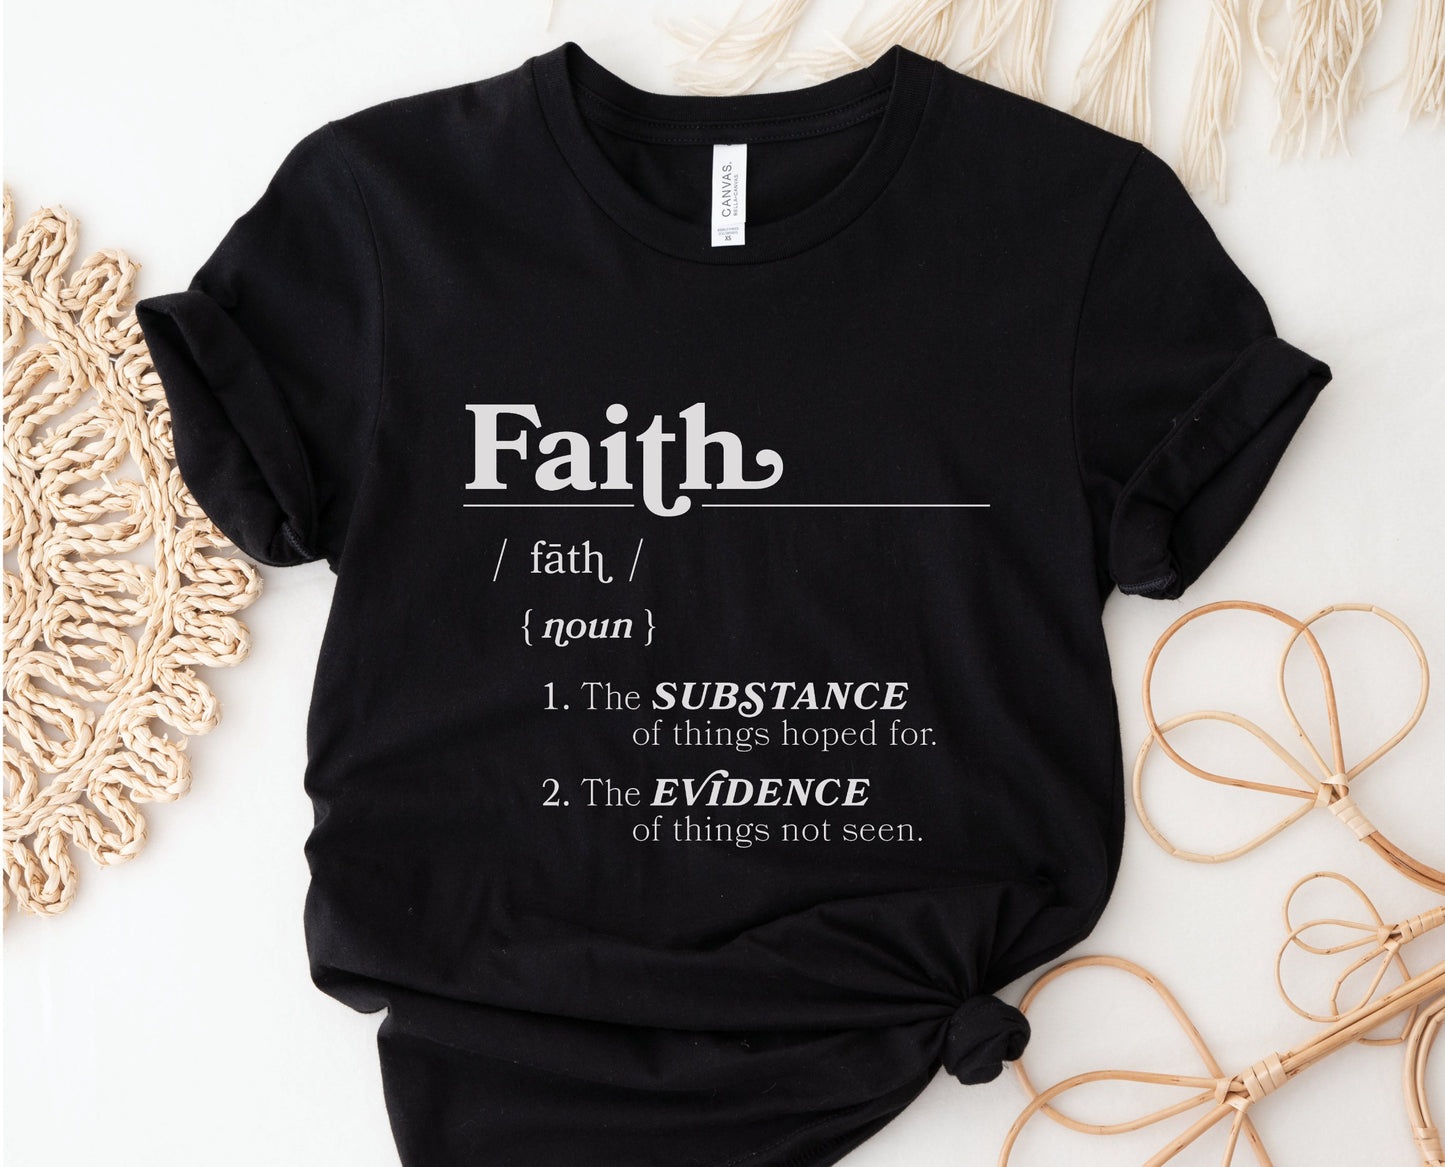 Faith Definition Hebrews 11:1 Christian aesthetic design printed in white on soft black unisex t-shirt for women and men